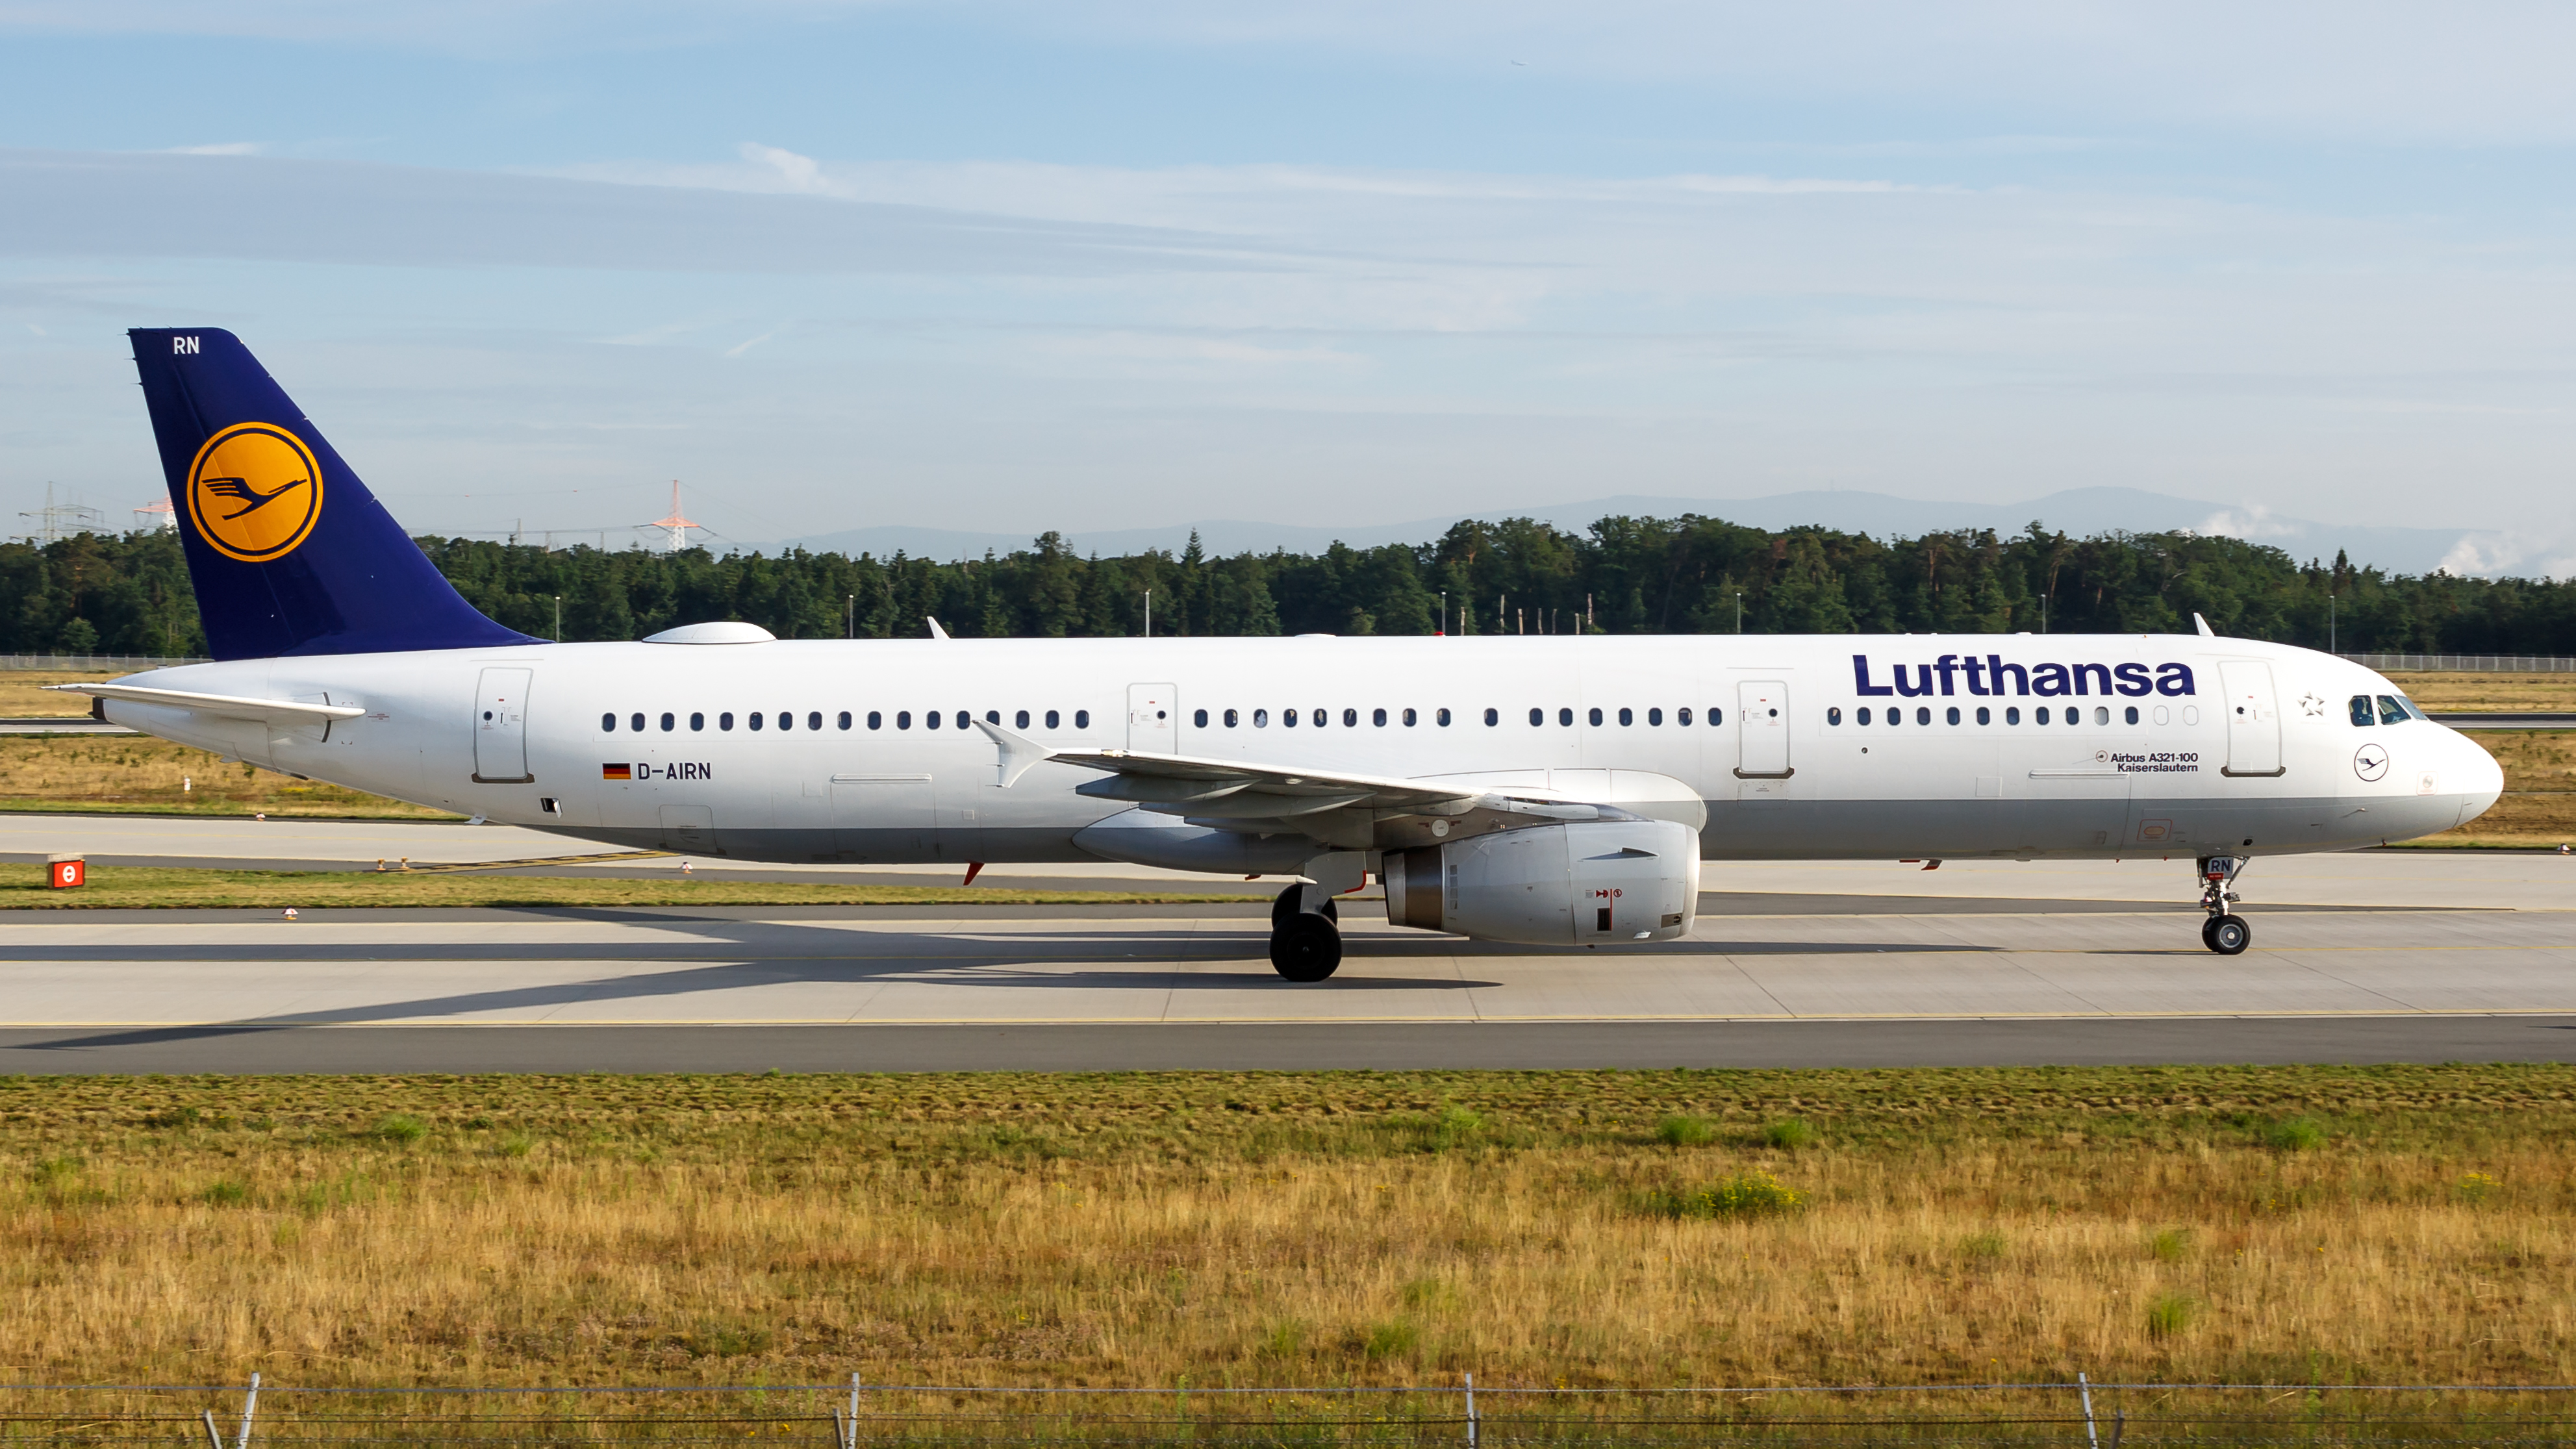 File Lufthansa Airbus A321 100 D Airn At Frankfurt Airport 2 Jpg Wikimedia Commons